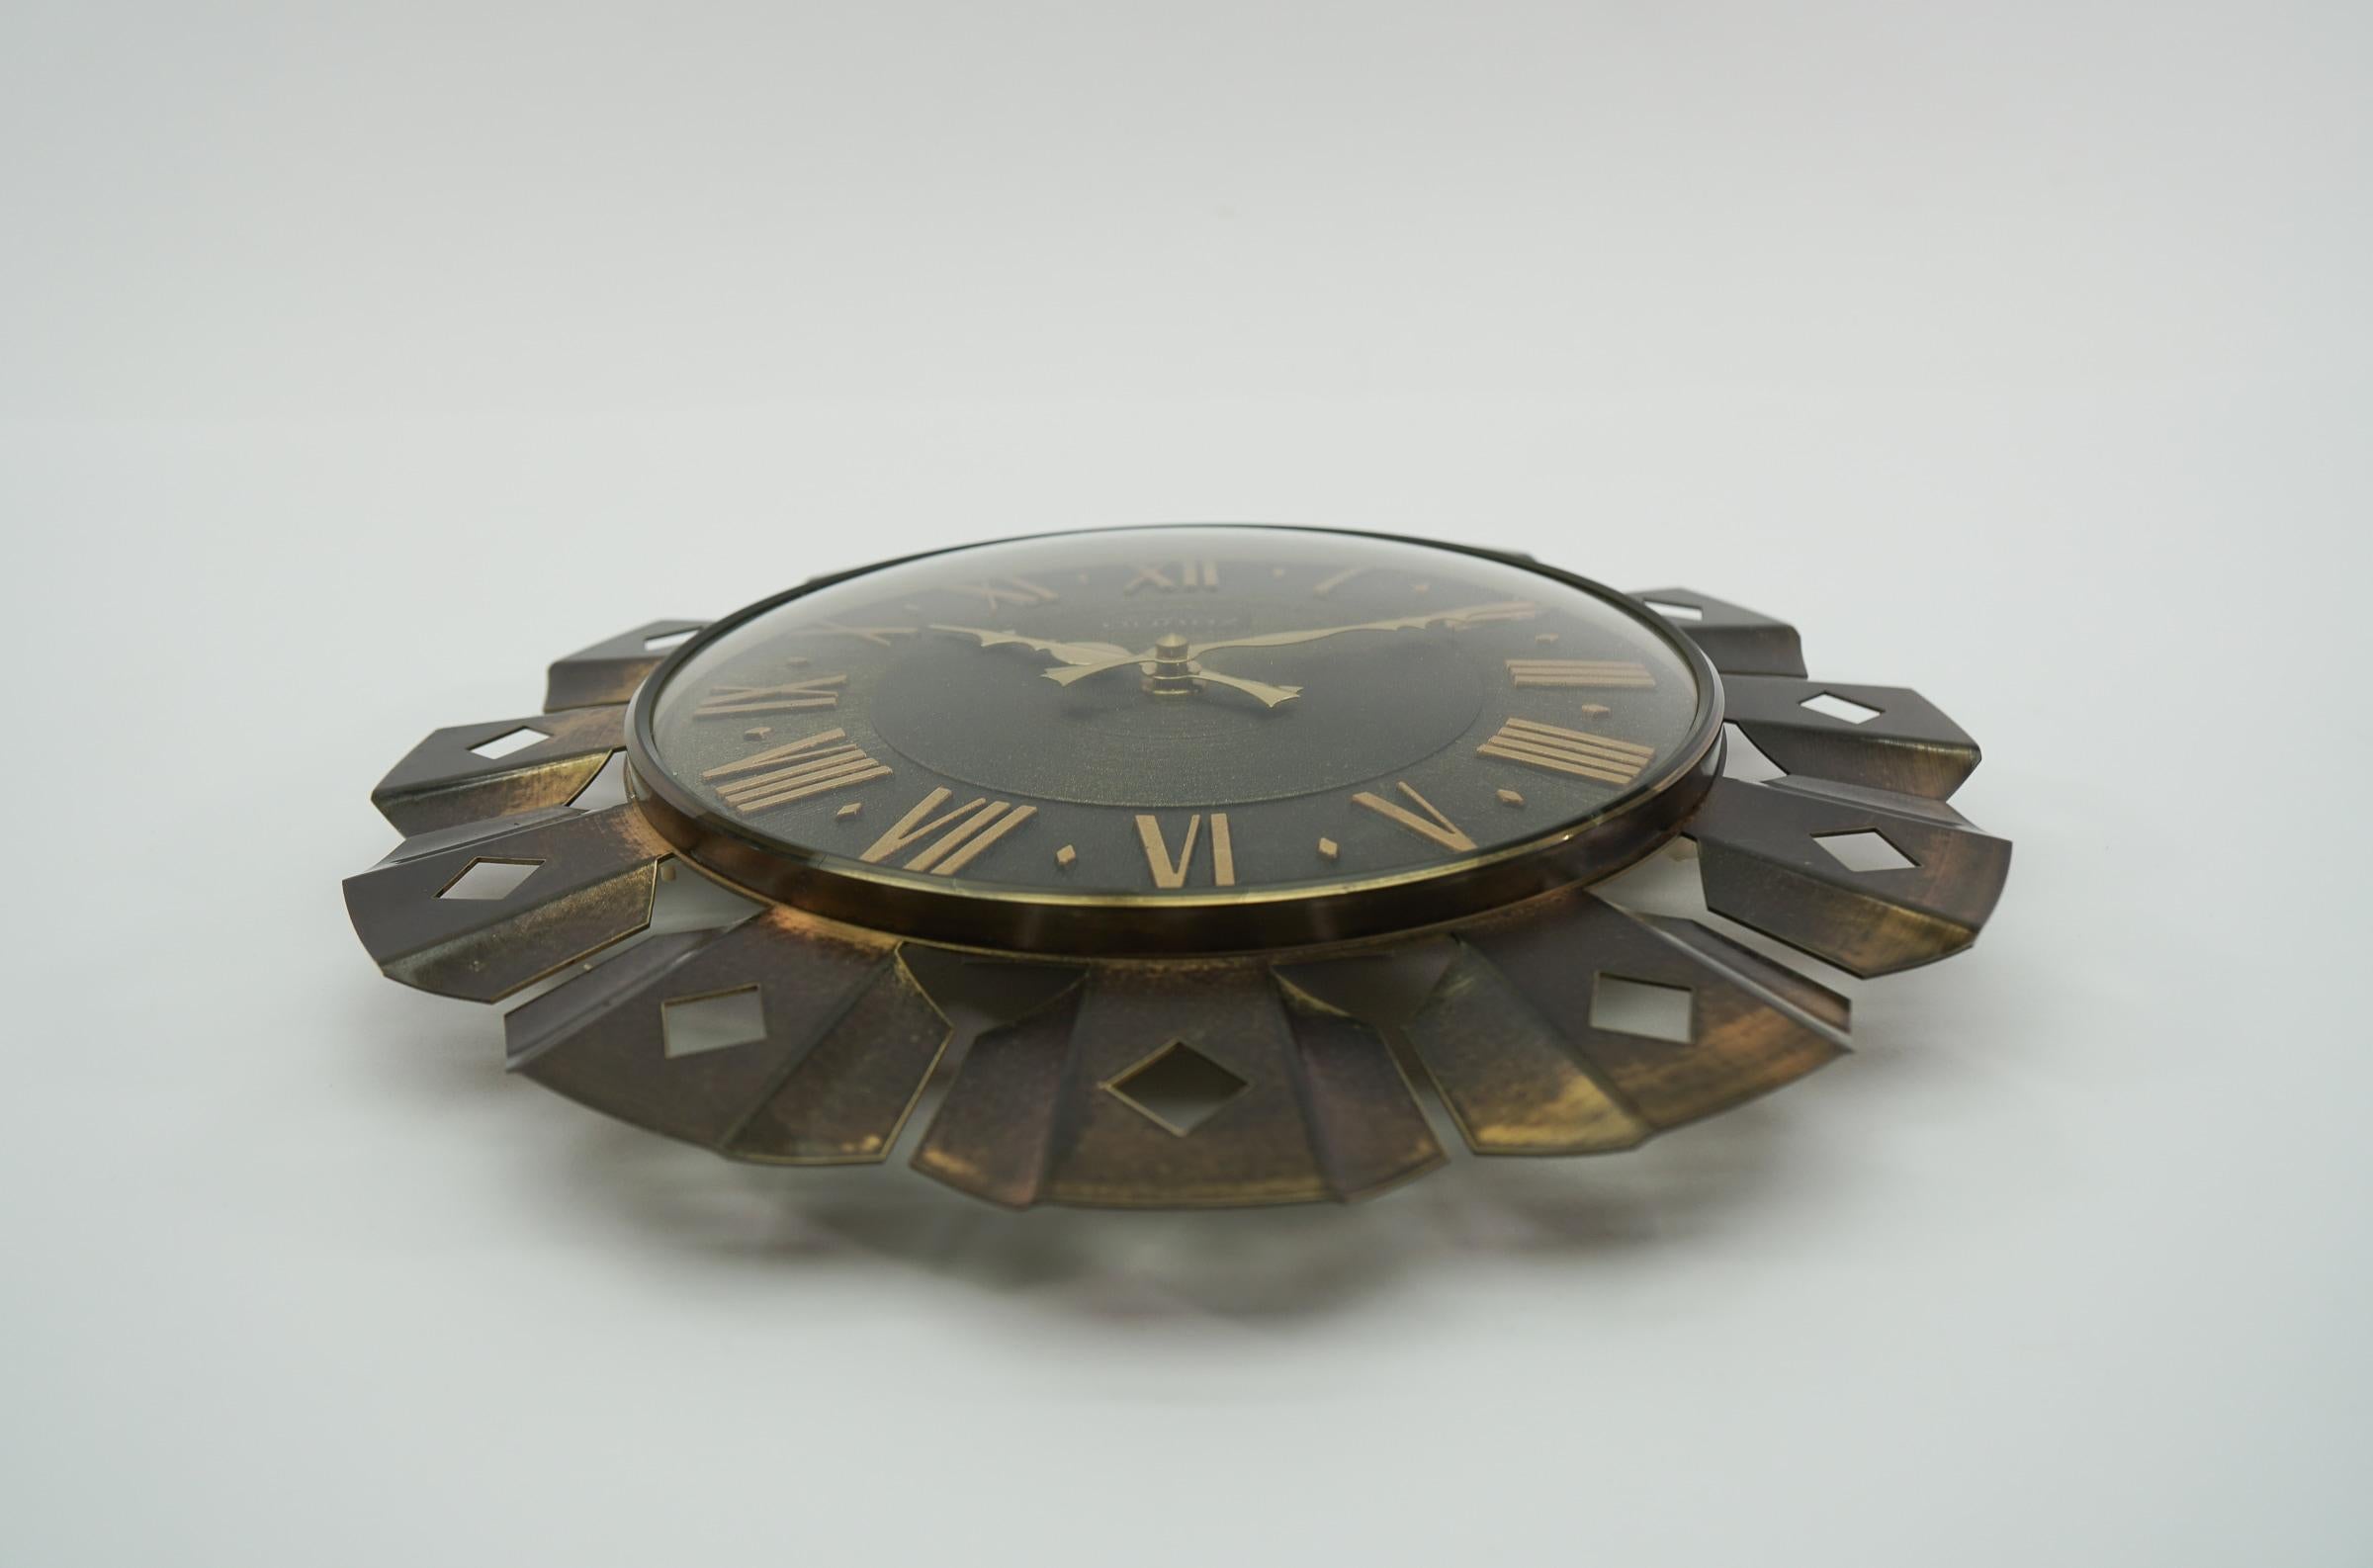 Mid-Century Modern Sunburst Wall Clock by Richter Quarz in Brass, 1960s Germany For Sale 1